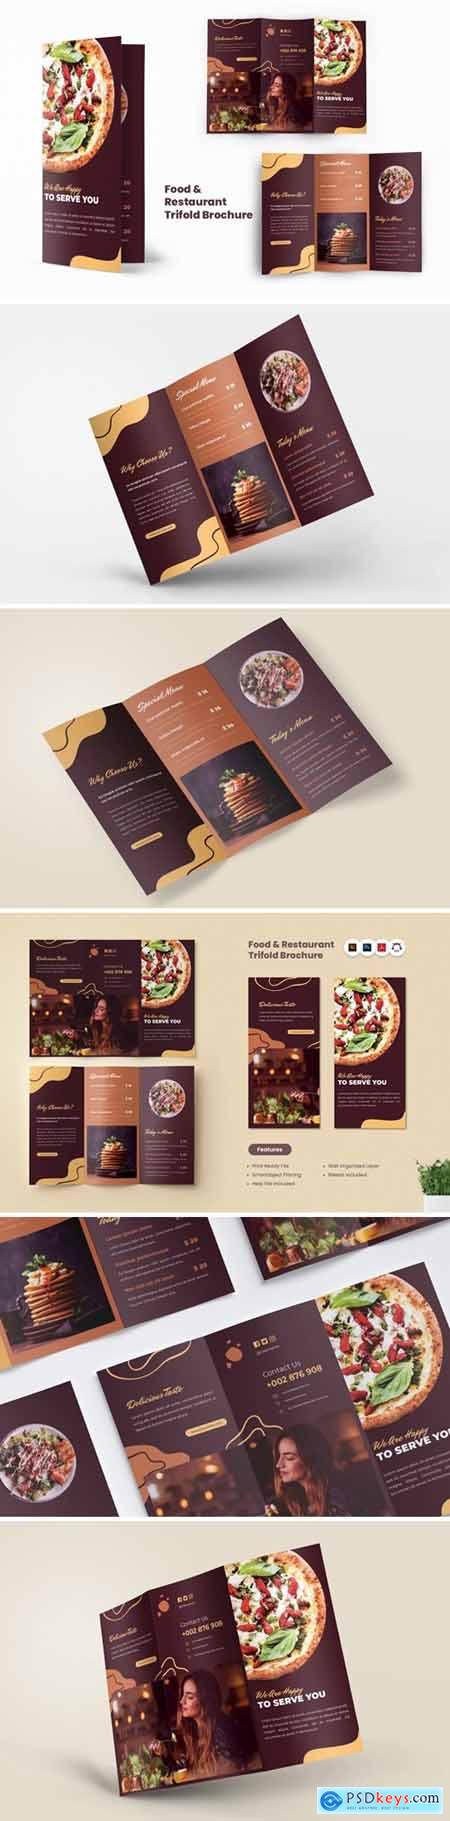 Food & Restaurant Trifold Brochure